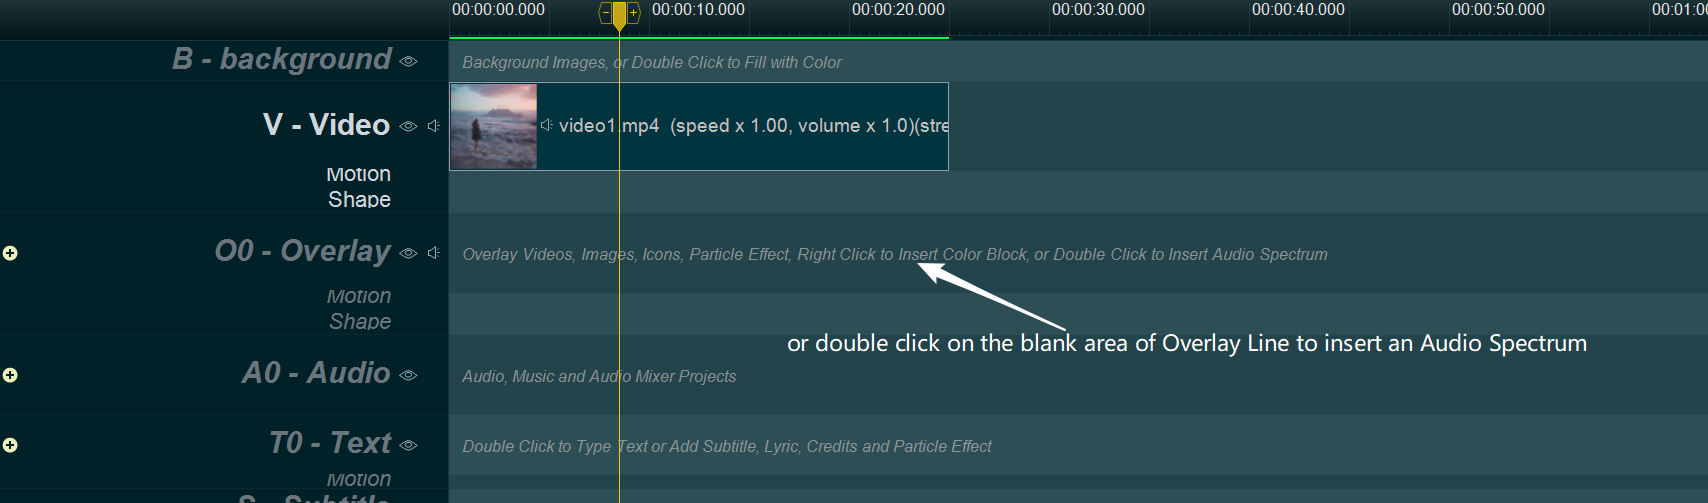 double click to add audio spectrum